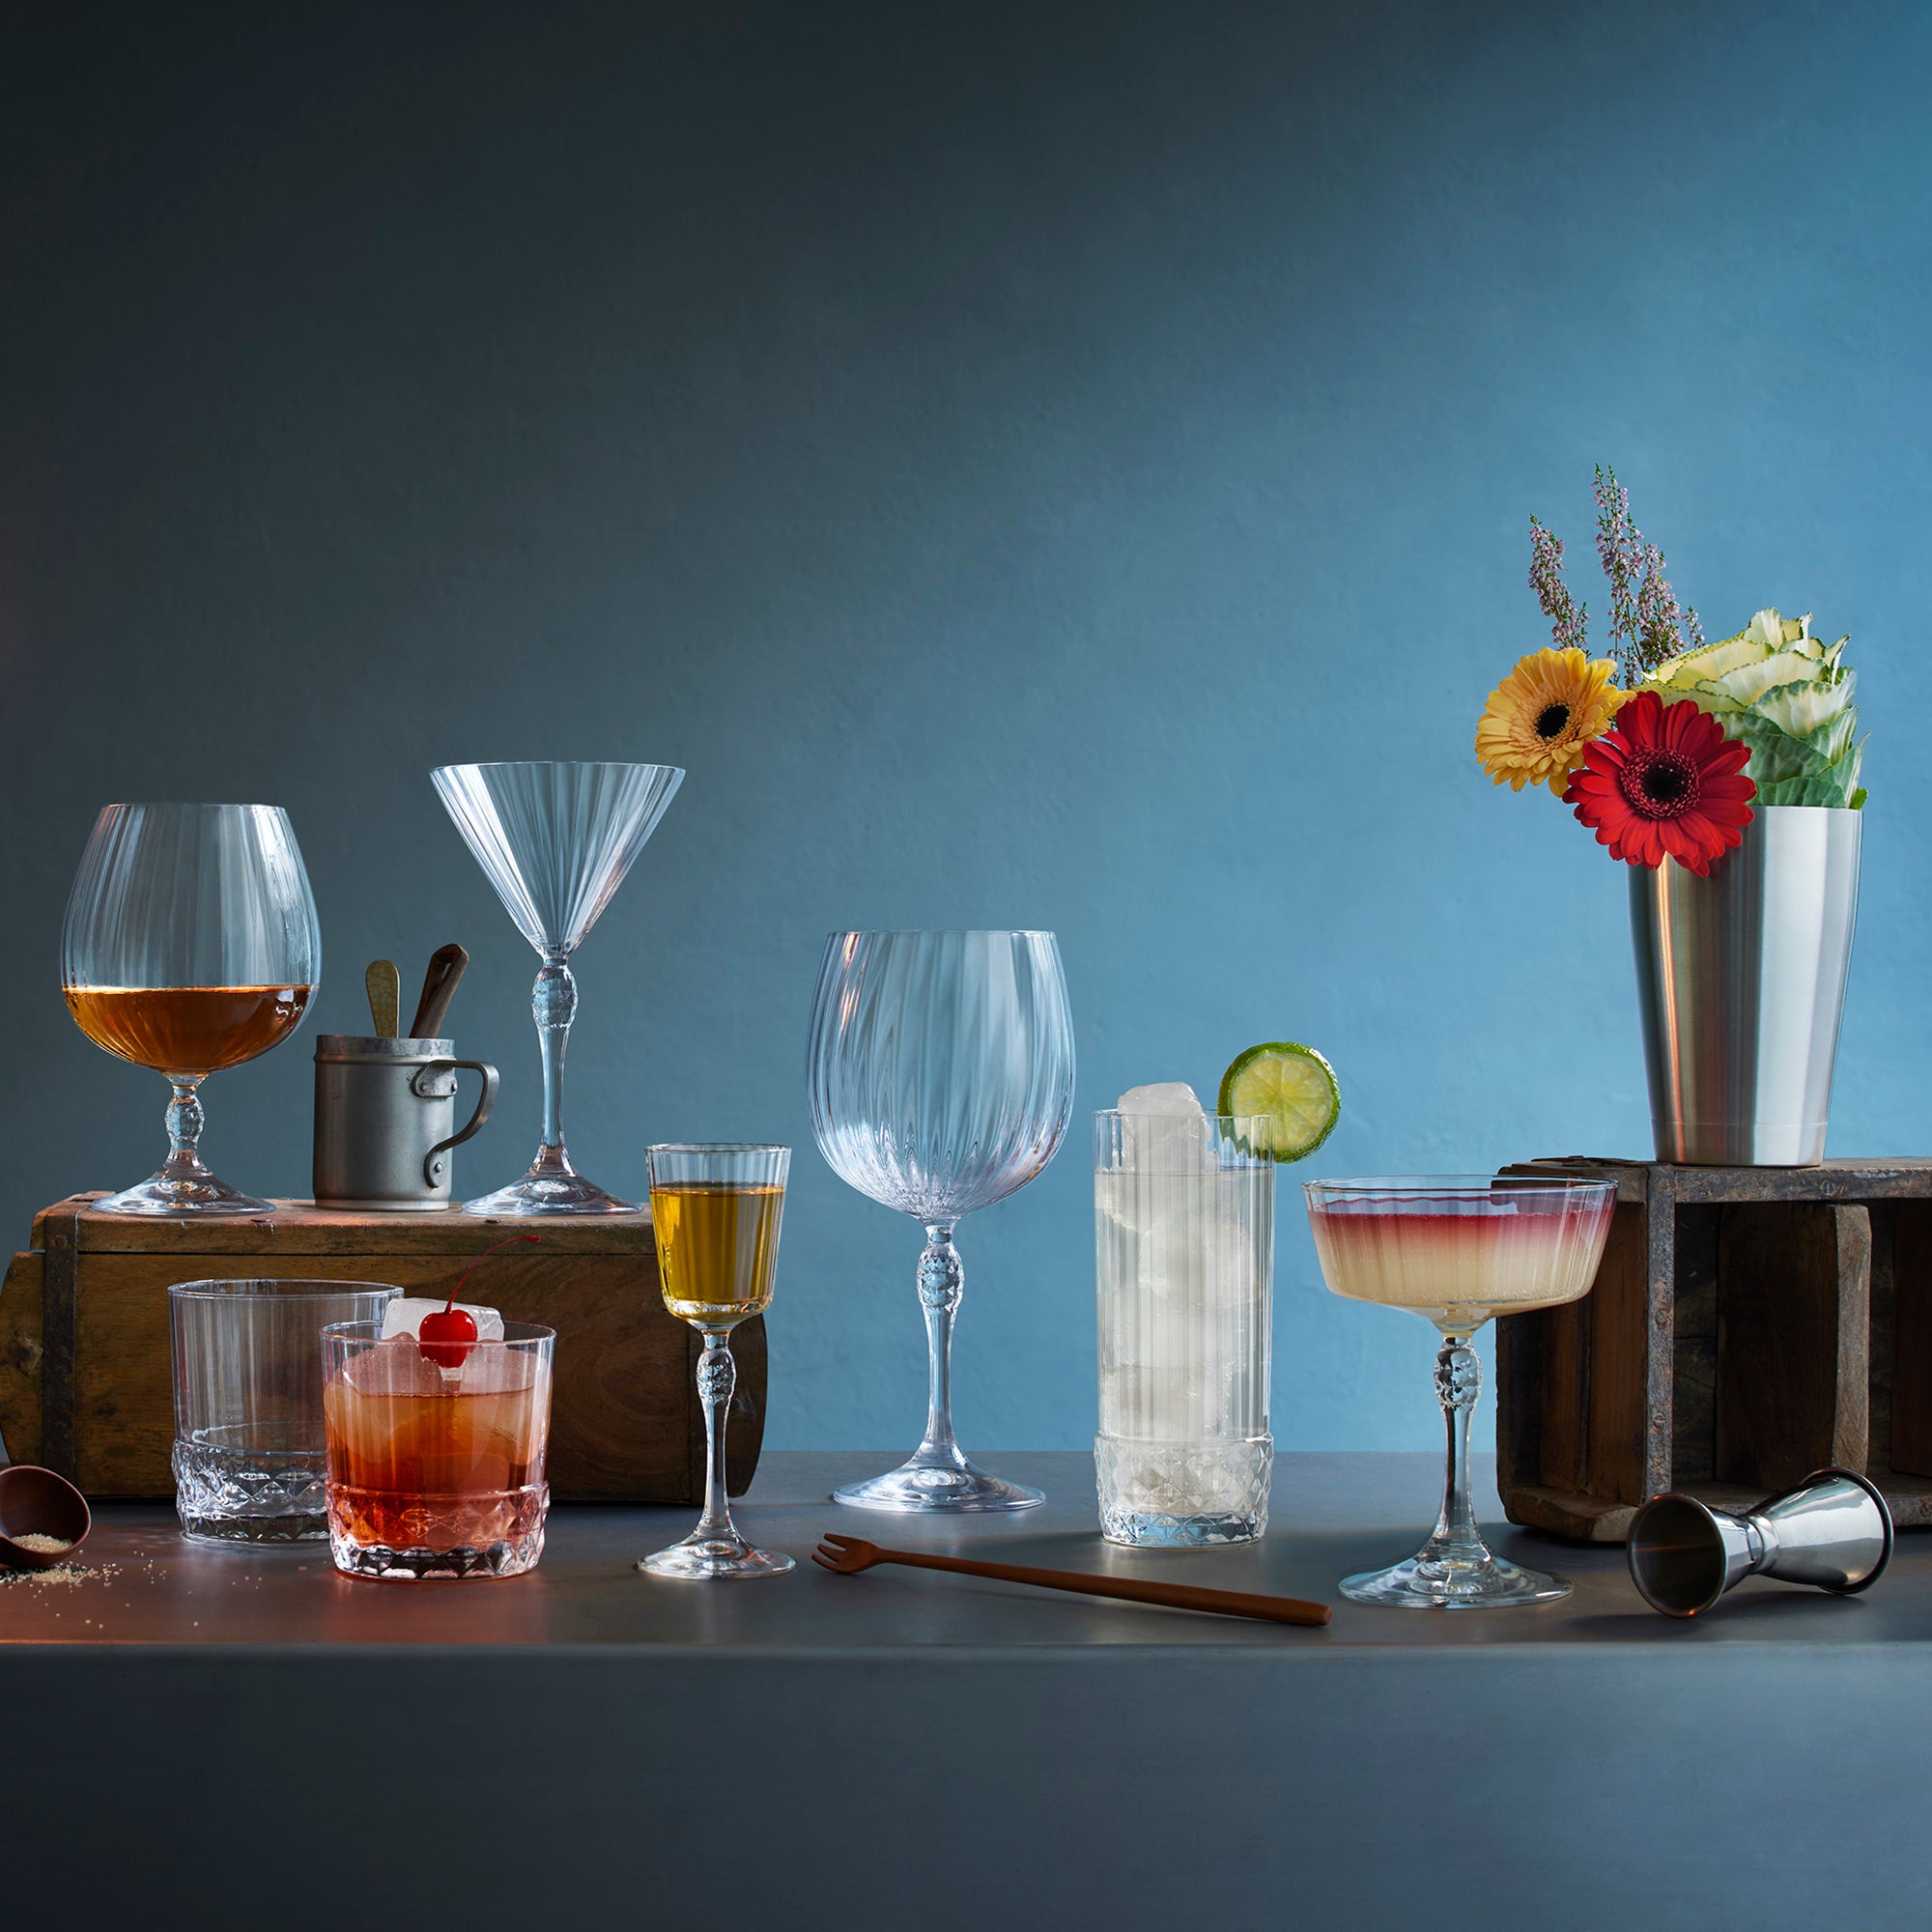 Luigi Bormioli Italian Glassware for Wine & Cocktails (Set of 4